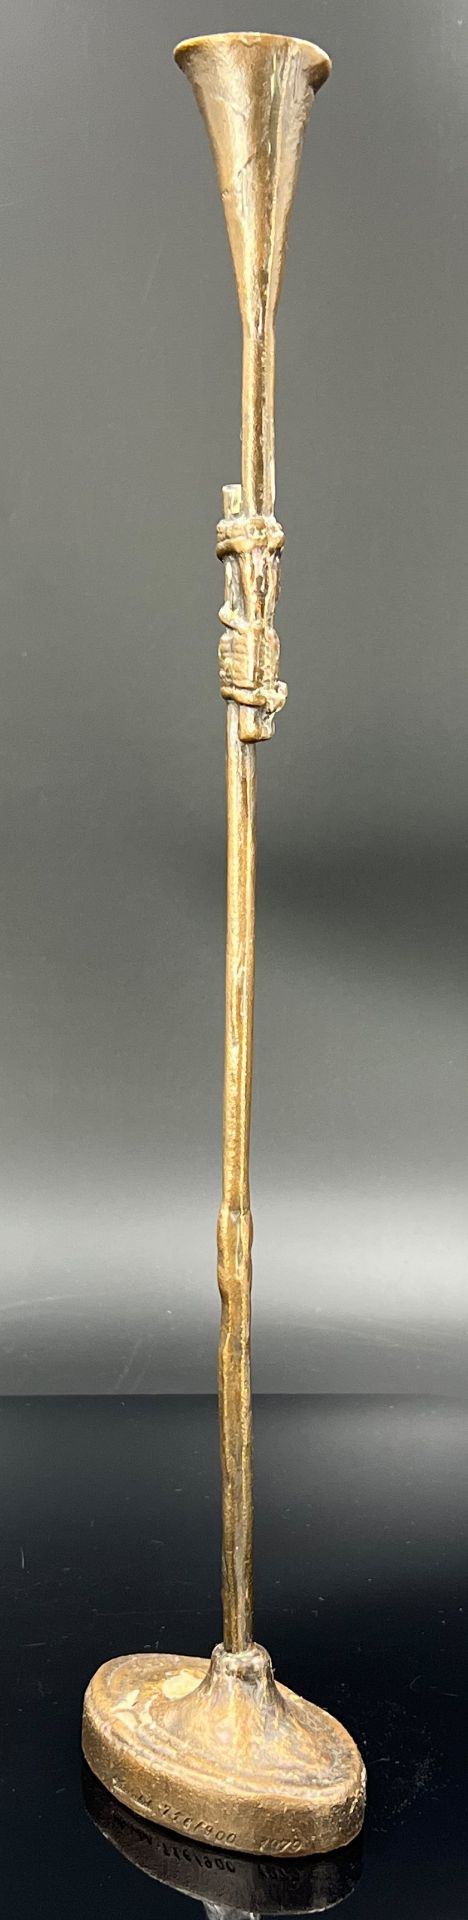 Paul WUNDERLICH (1927 - 2010). Bronze. "Candlestick". - Image 2 of 7